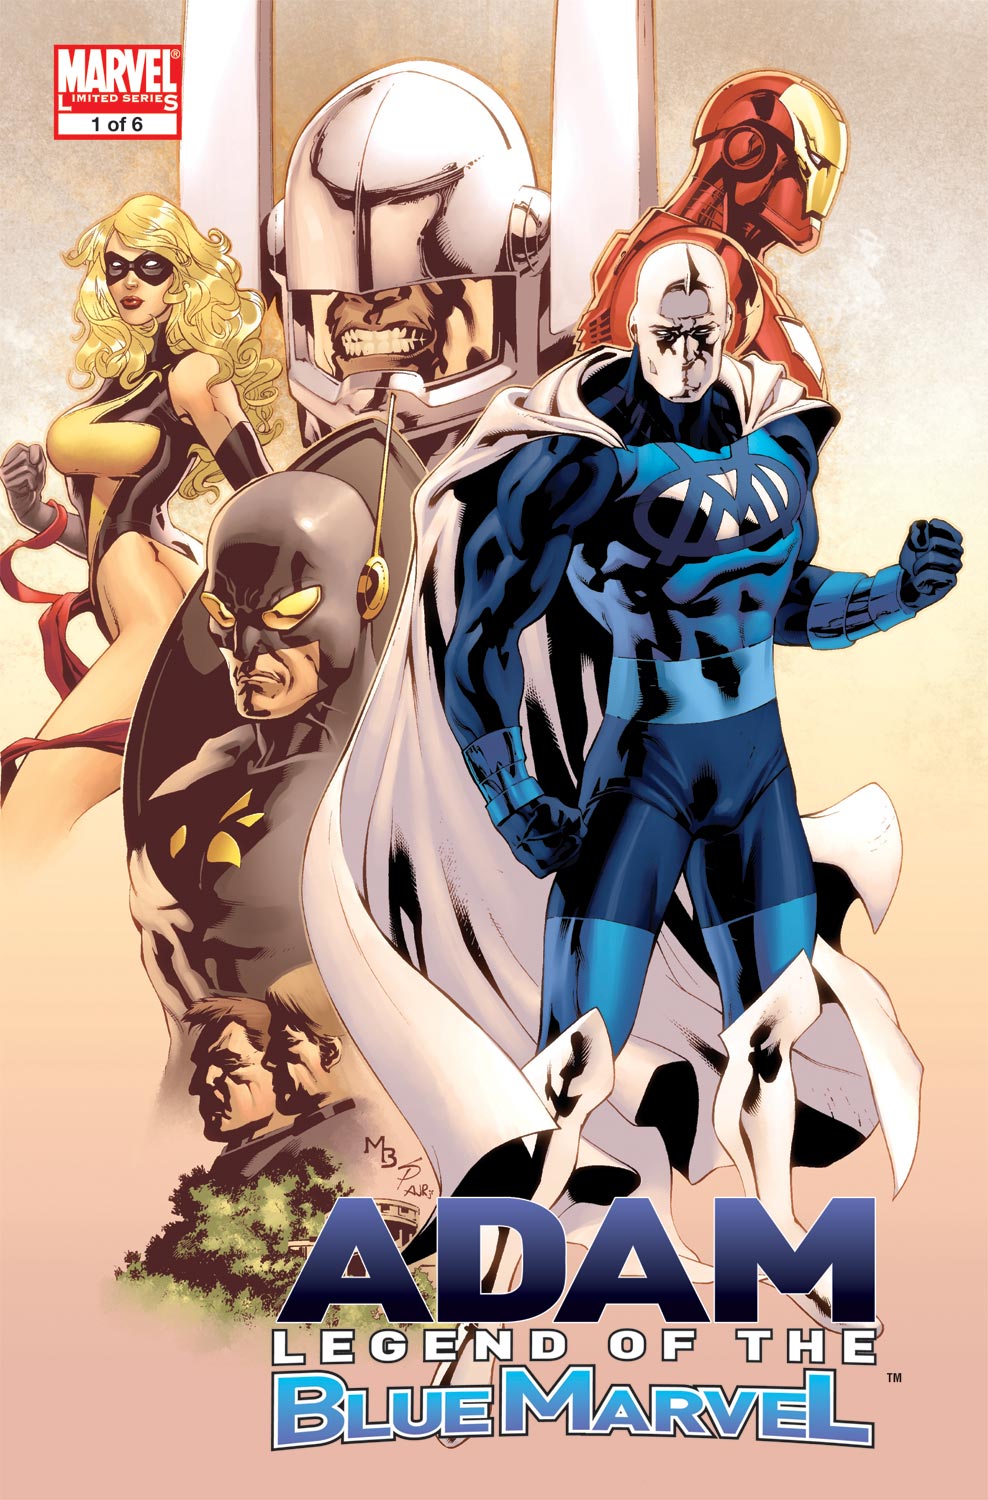 Adam: Legend of the Blue Marvel (2008) #1